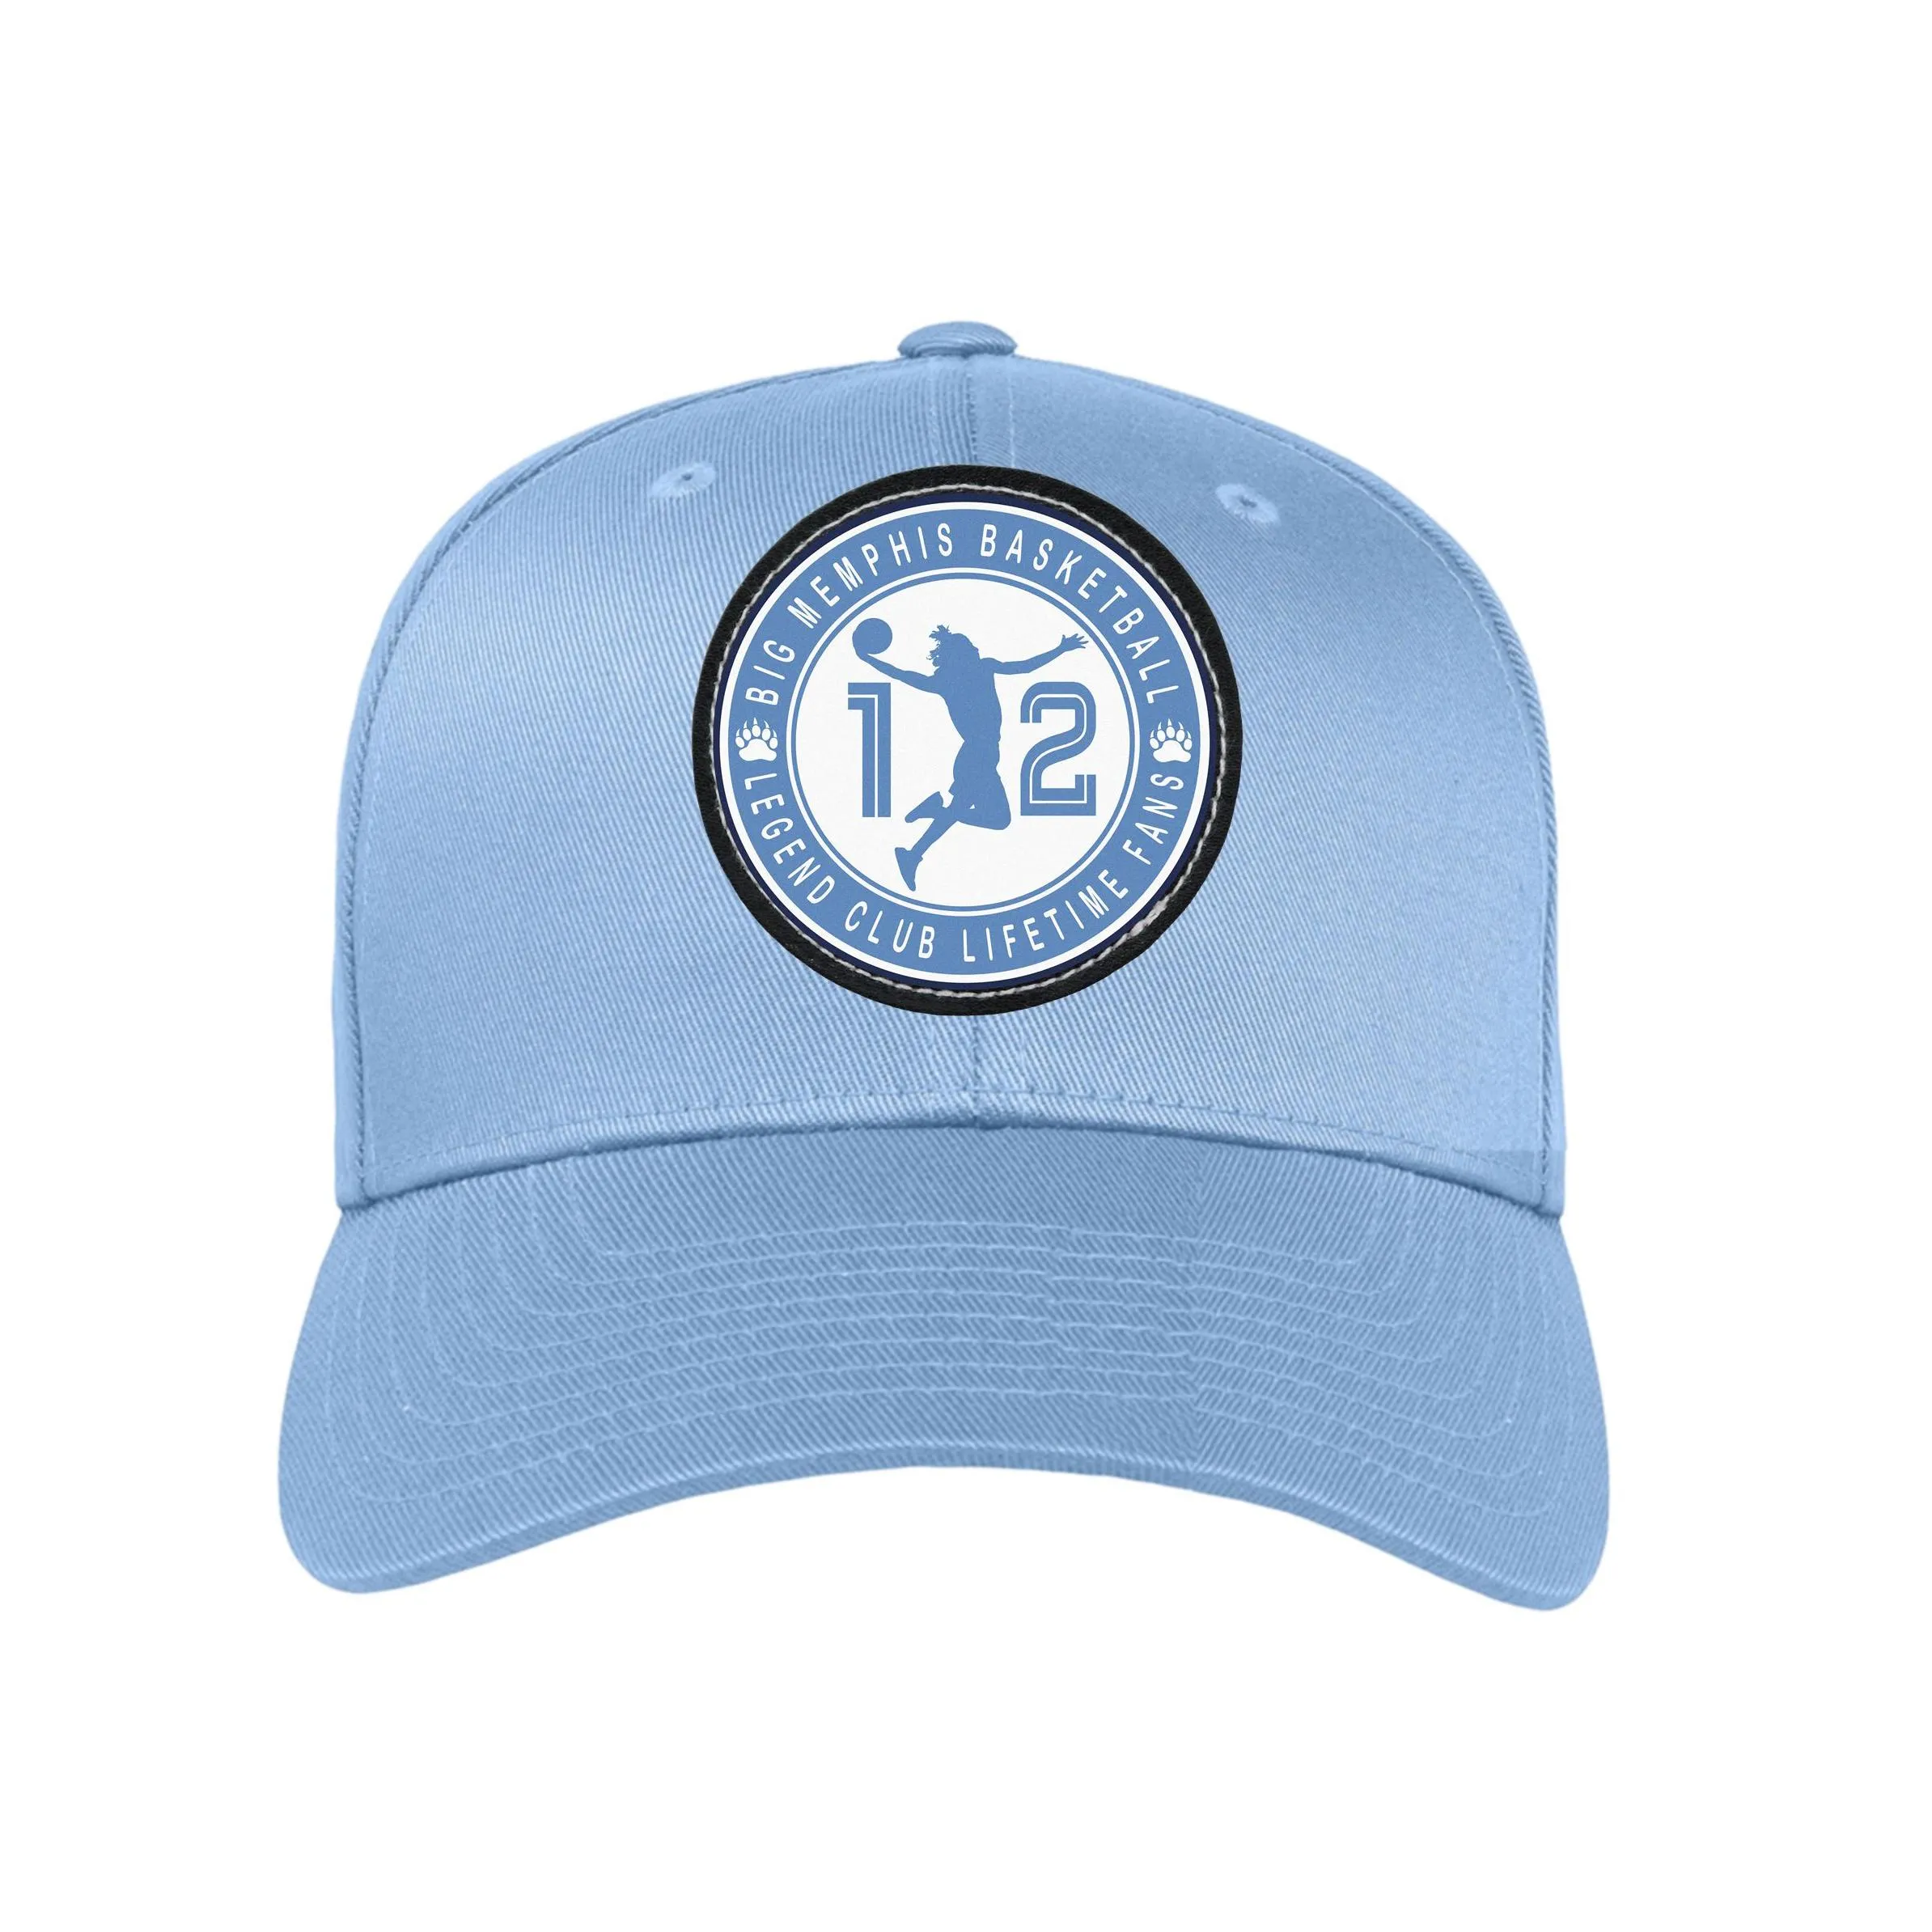 Unisex Memphis Basketball Baseball Cap Adjustable Versatile Premium Quality Classic Basketball Club 12 Legend Fans Hat